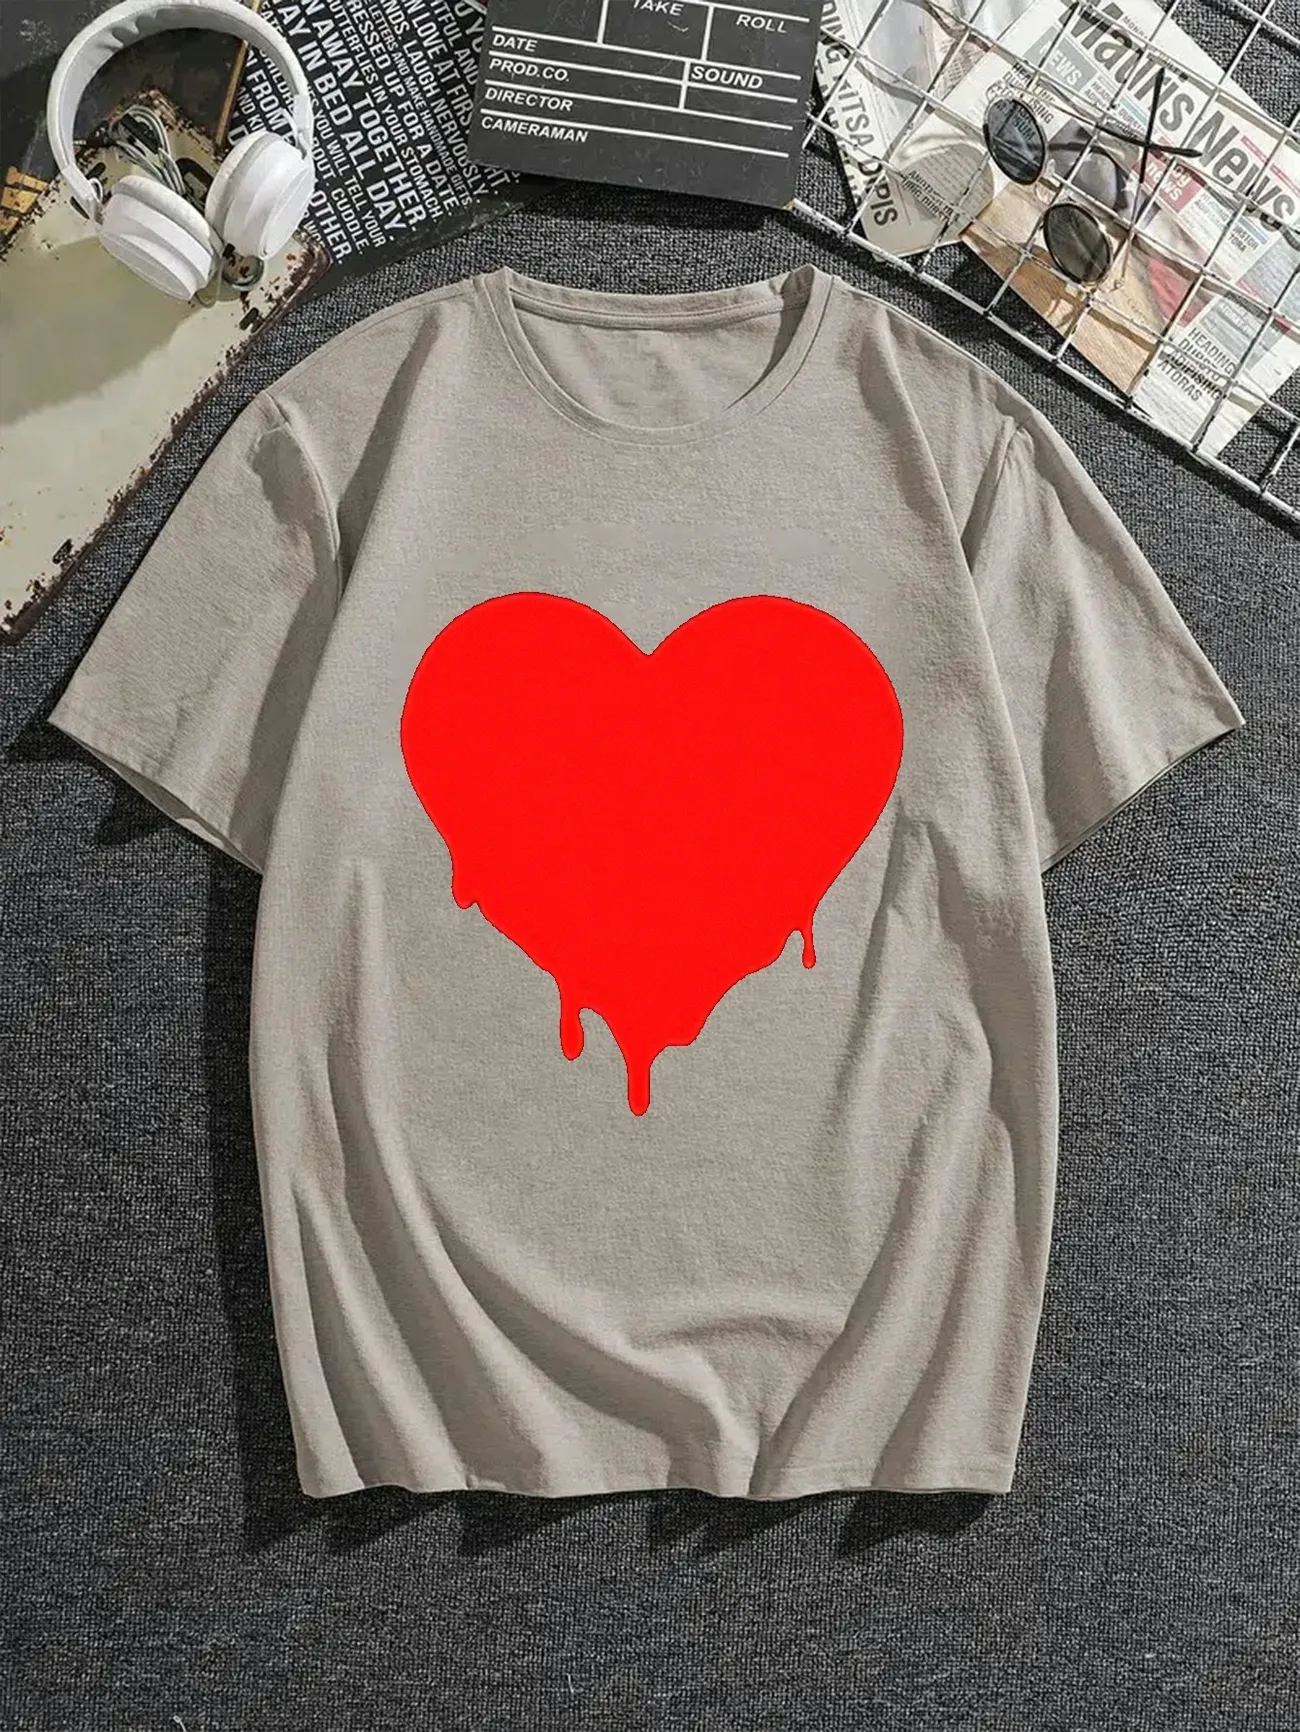 Melting Heart Trendy T-shirt For Men, Plus Size Comfy Summer